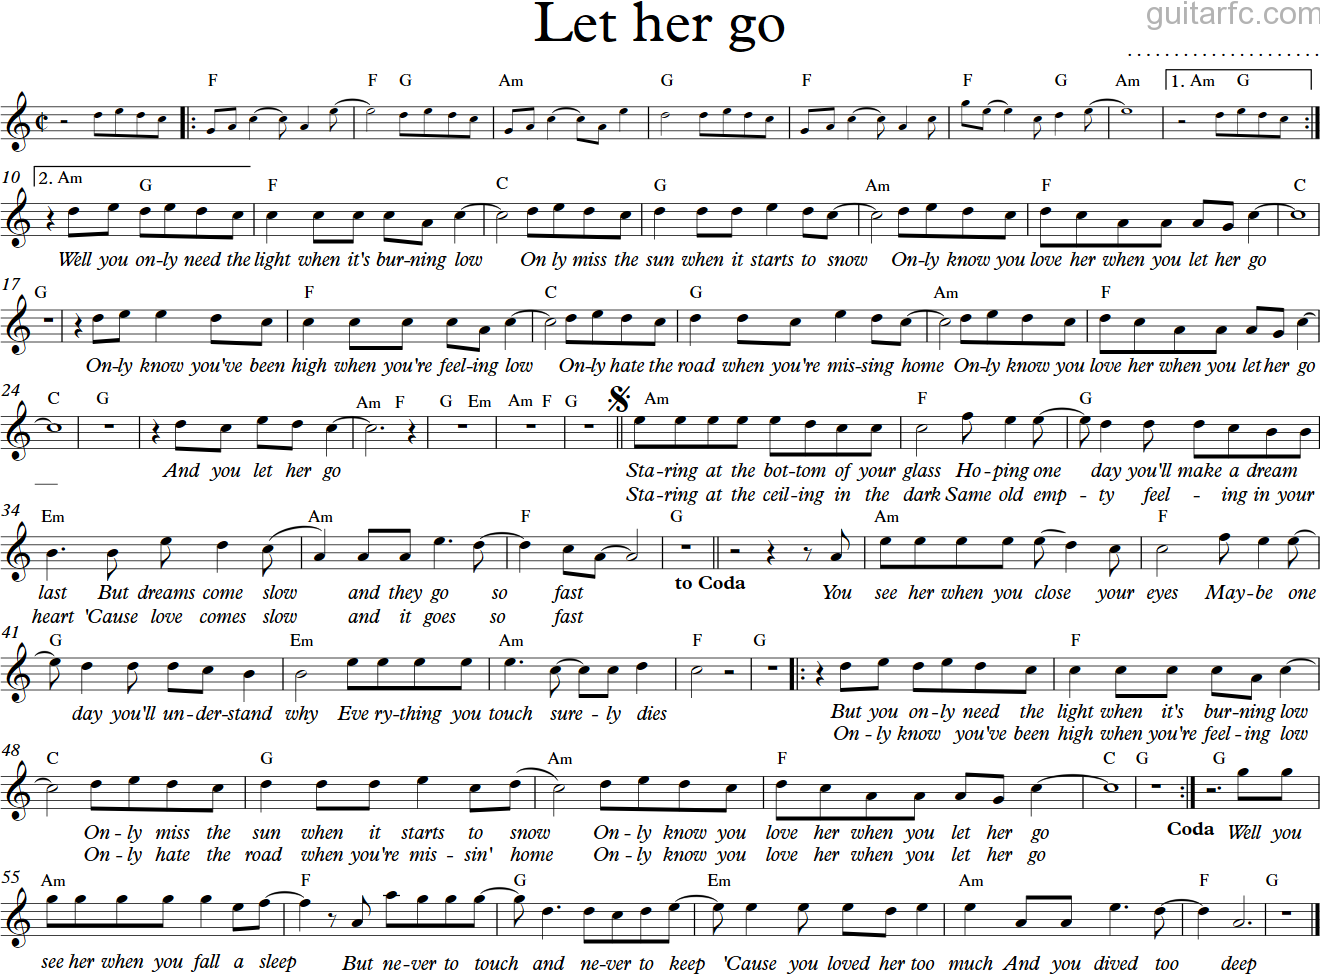 Let her go - C